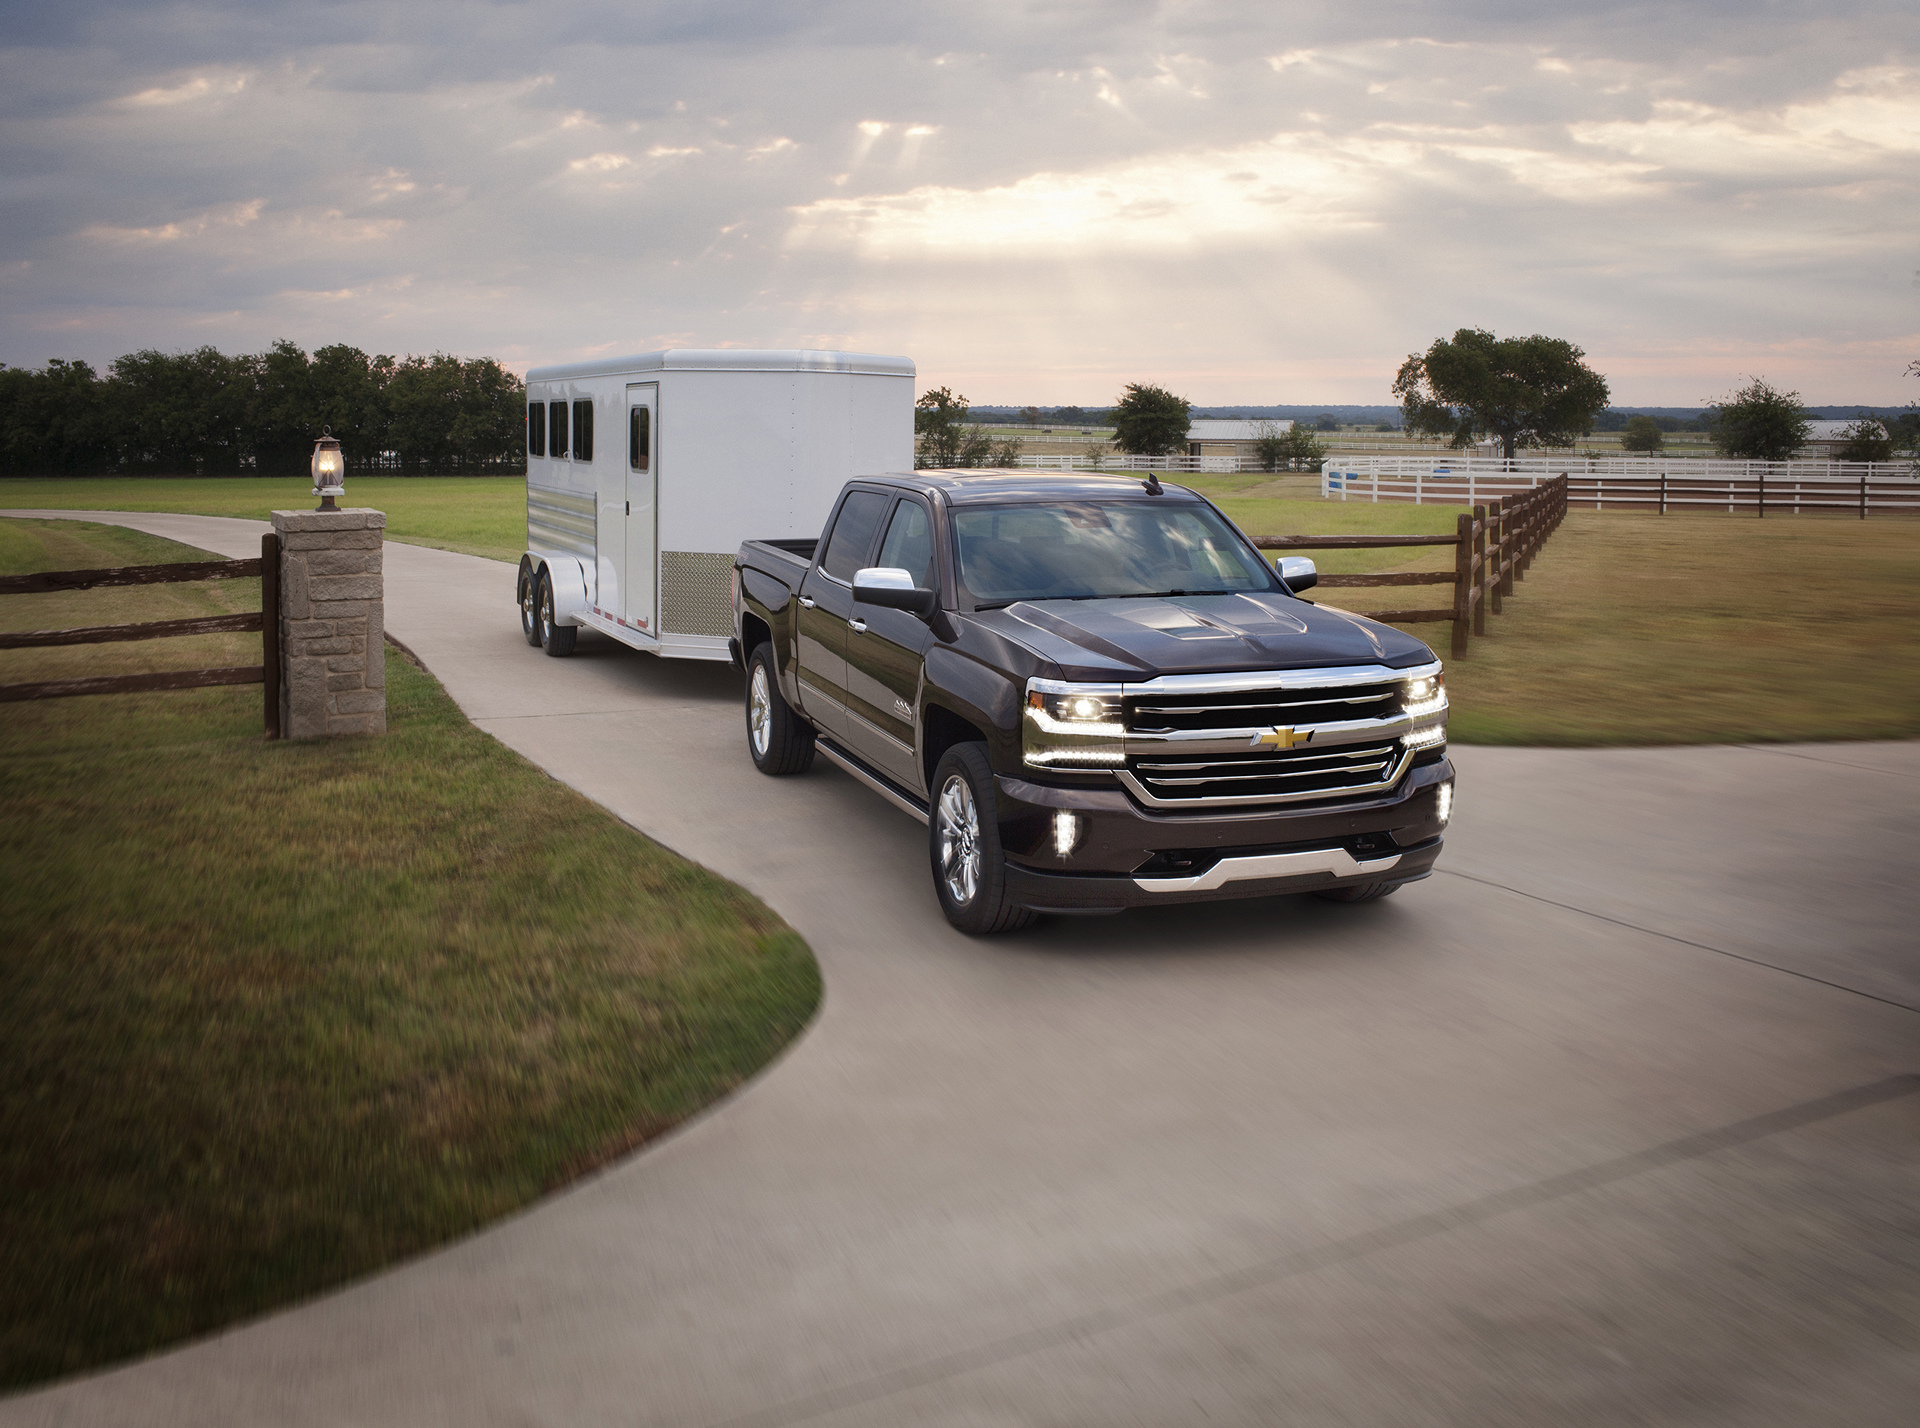 2016 Chevrolet Silverado 1500 High Country with trailer © General Motors